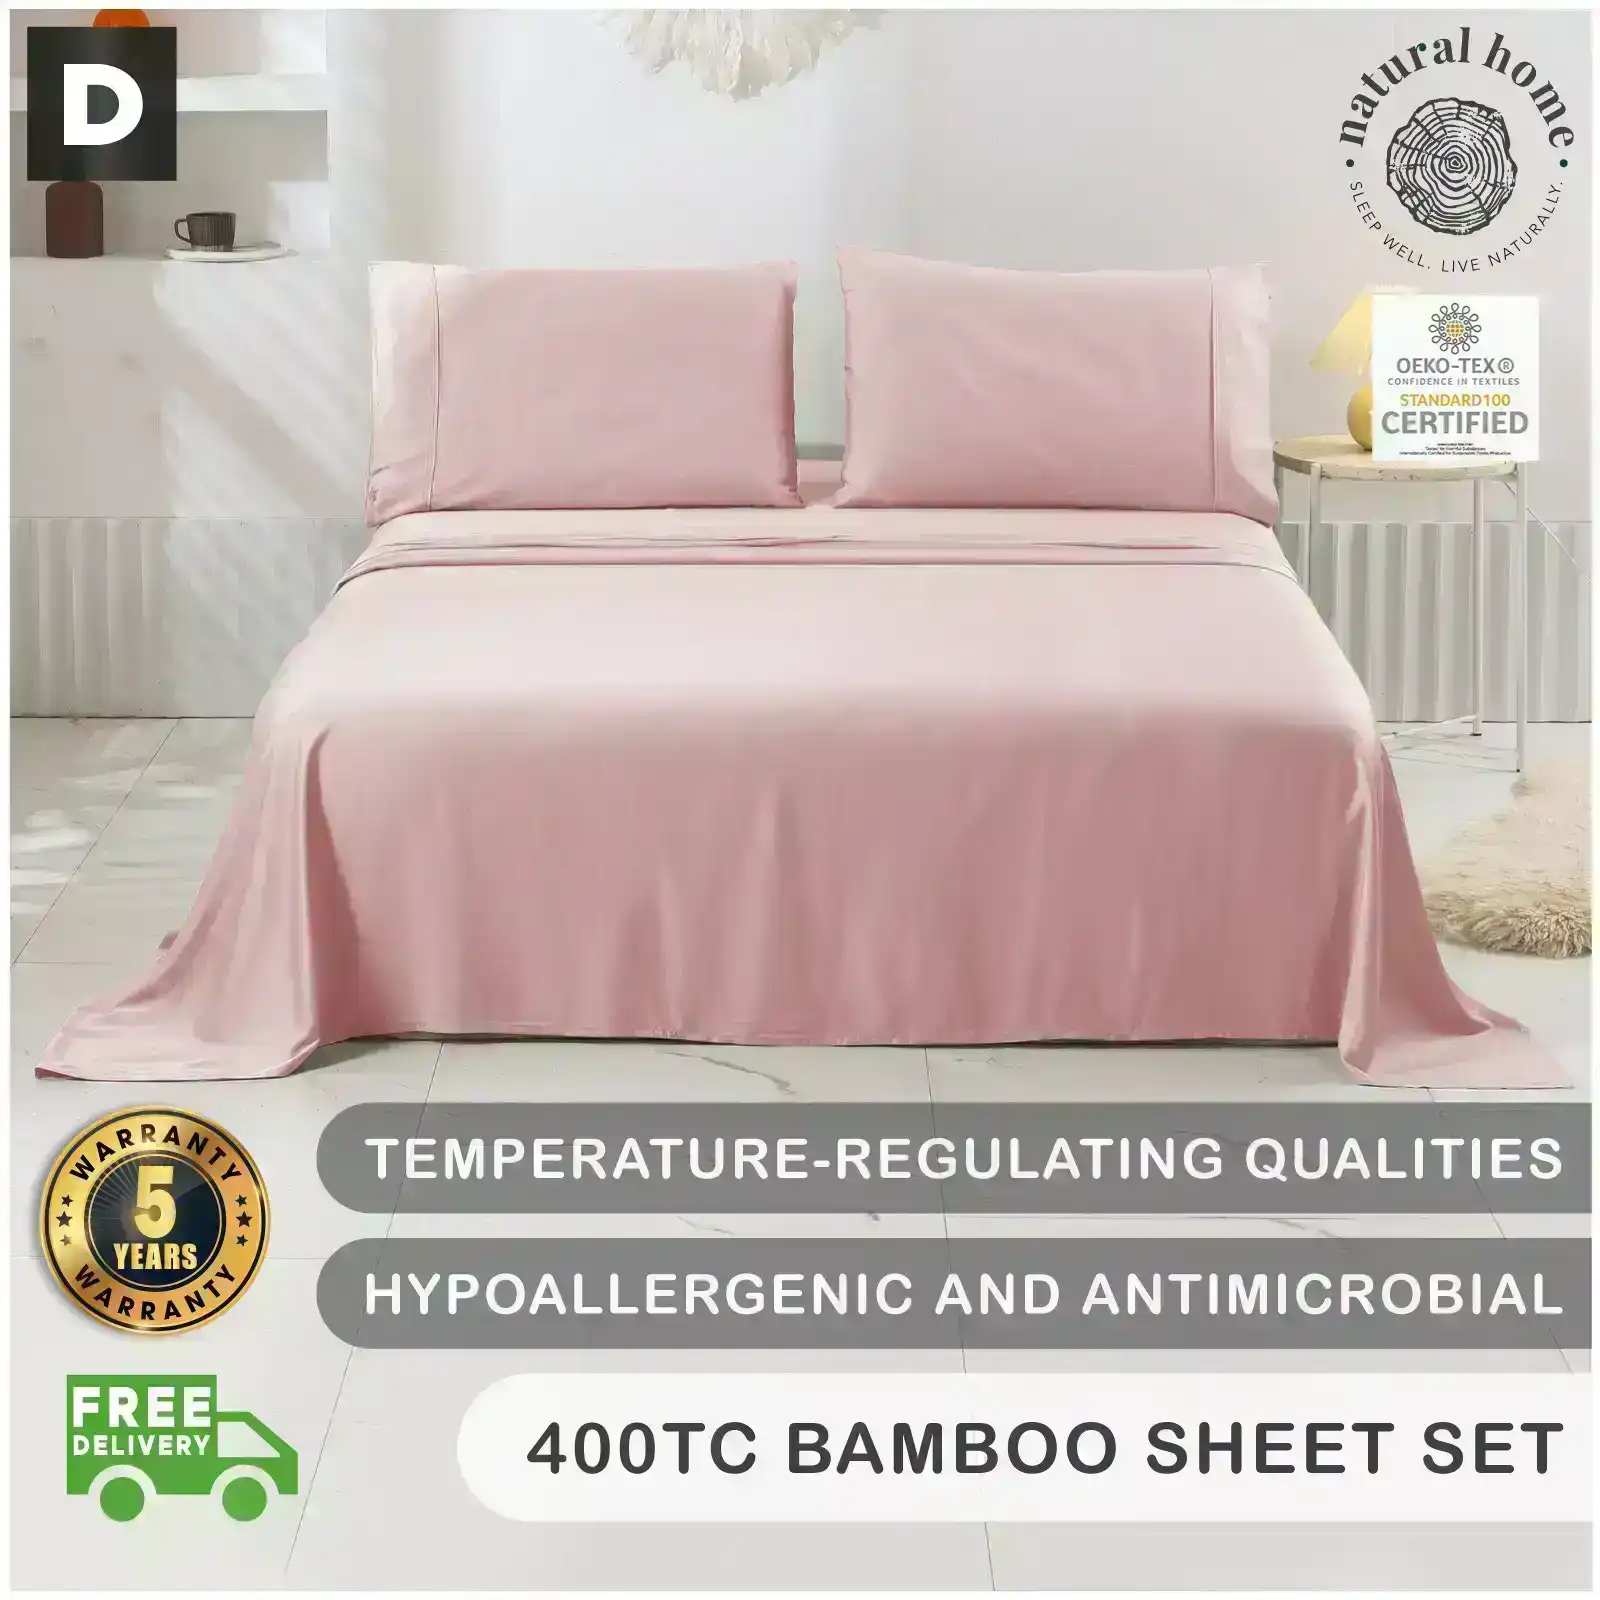 Natural Home Bamboo Sheet Set Blush Pink Double Bed